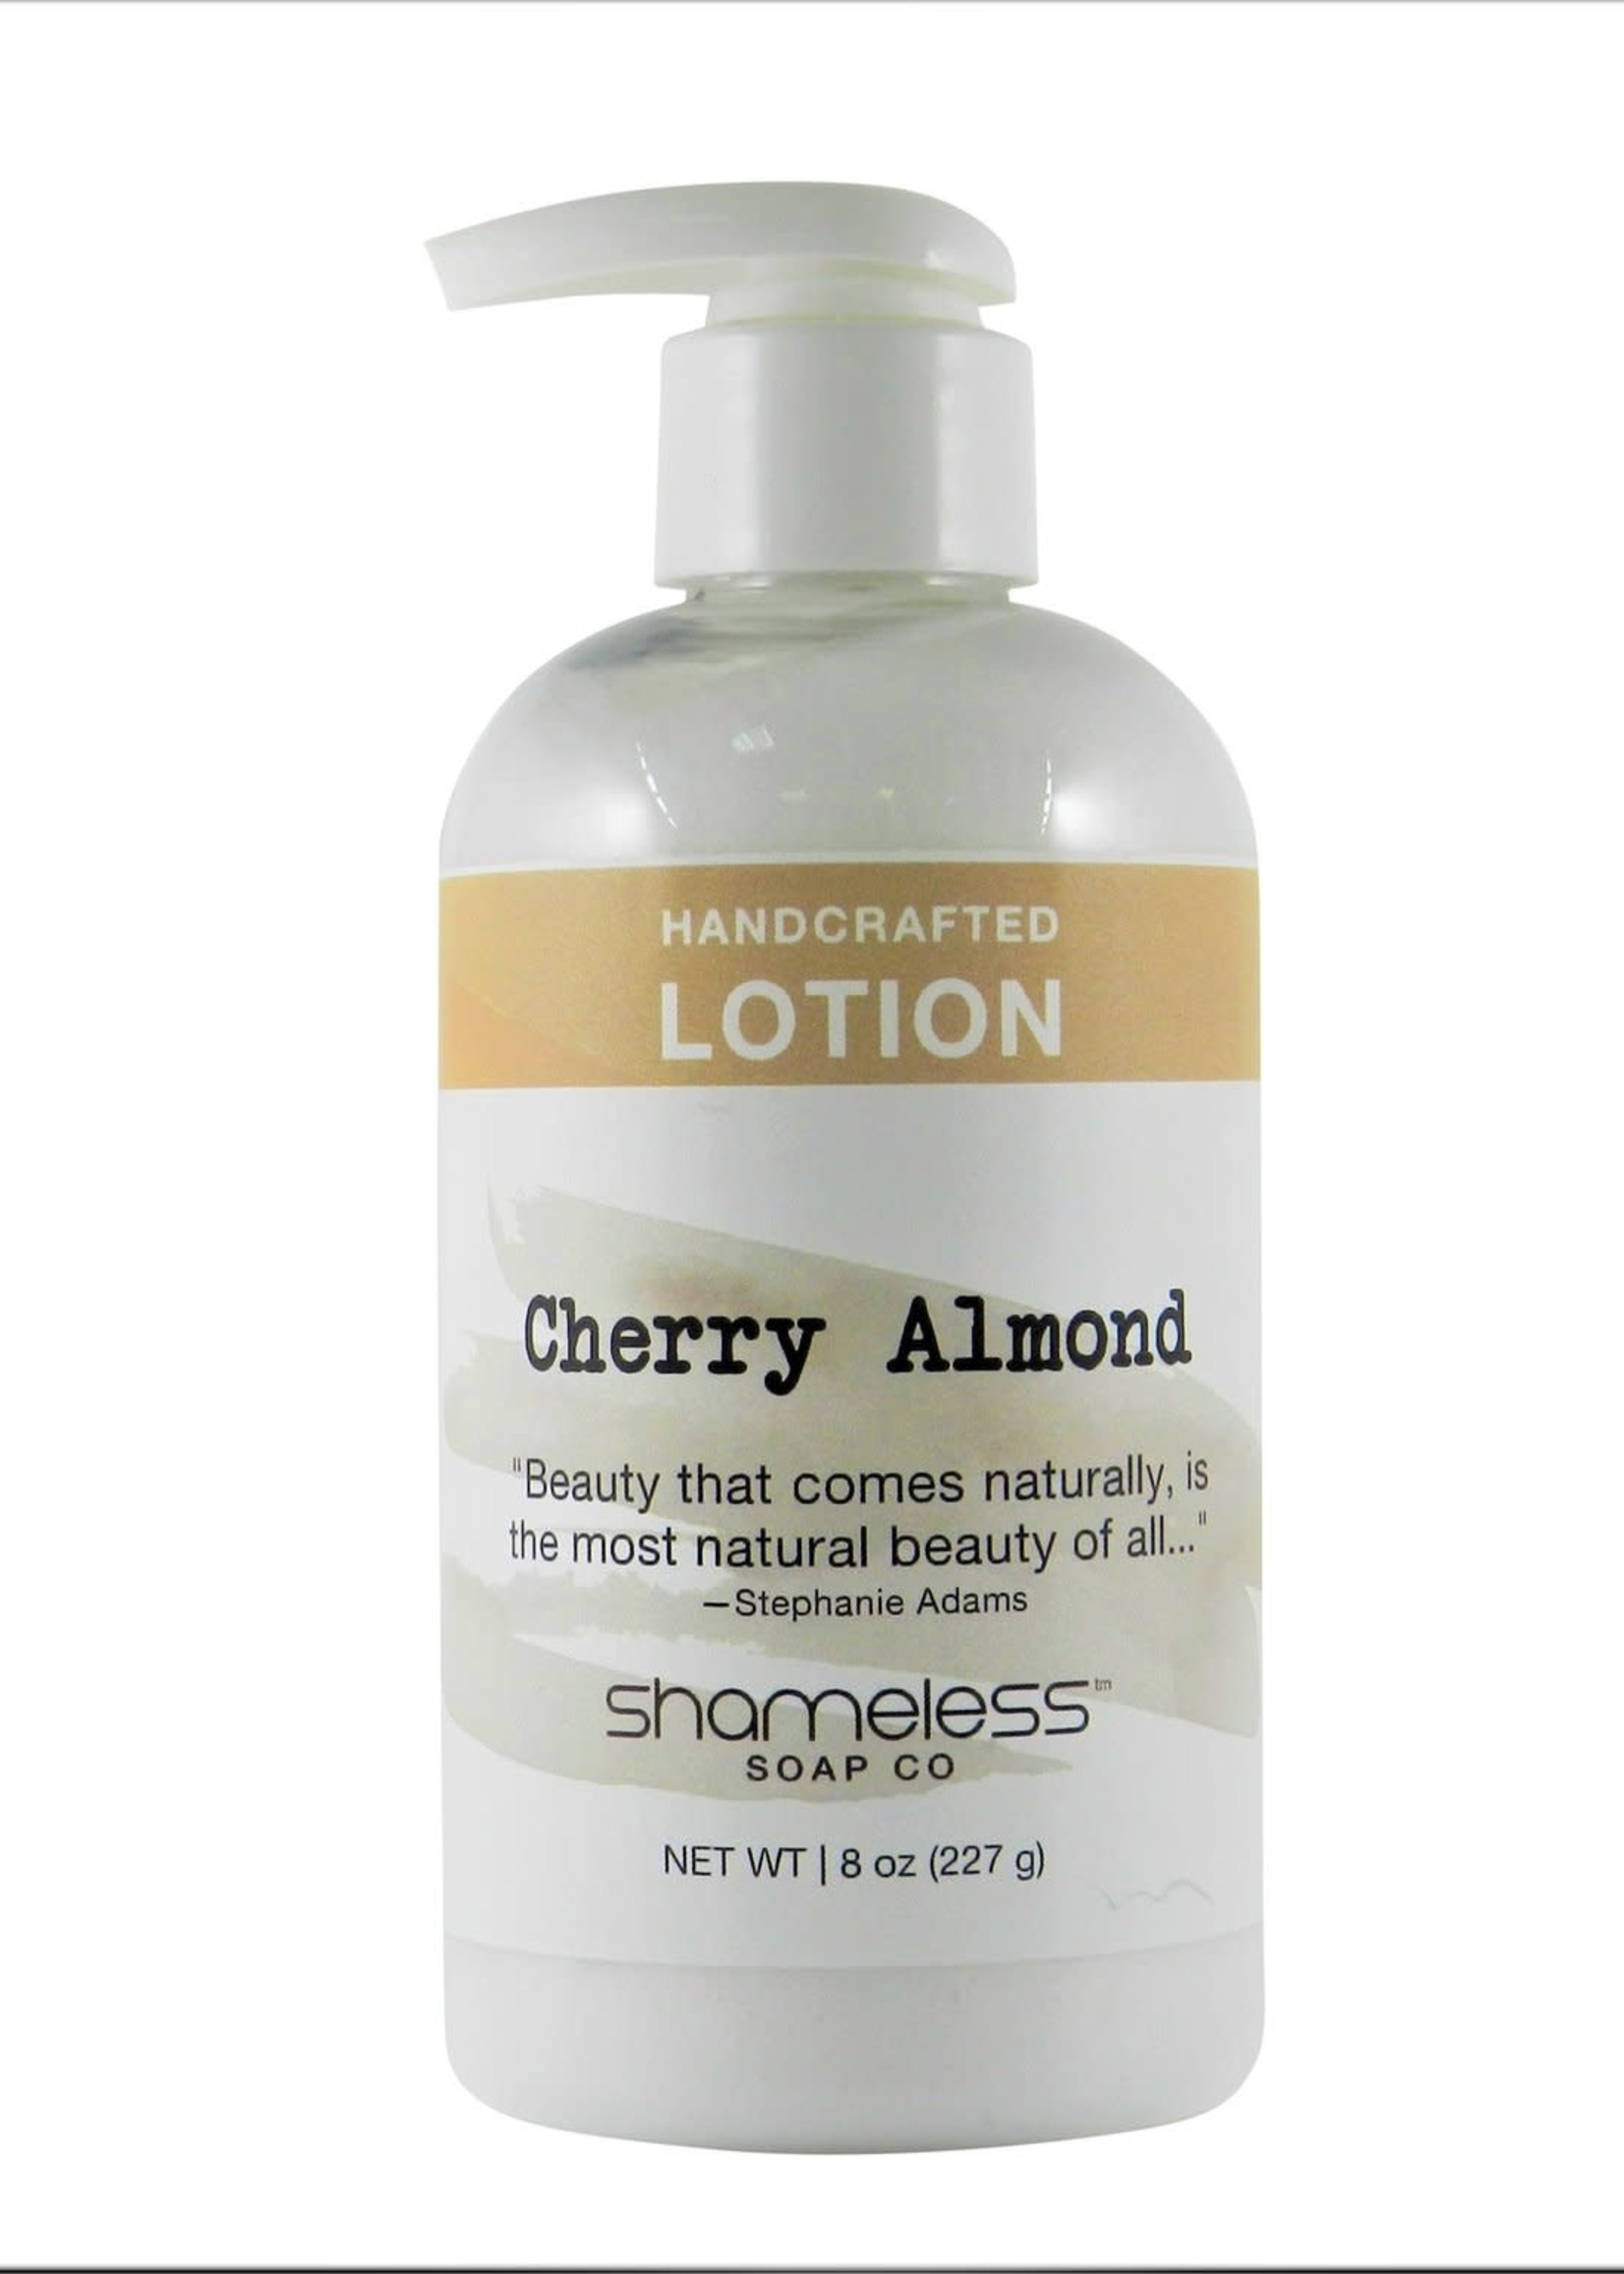 Shameless Soap Co Cherry Almond Lotion